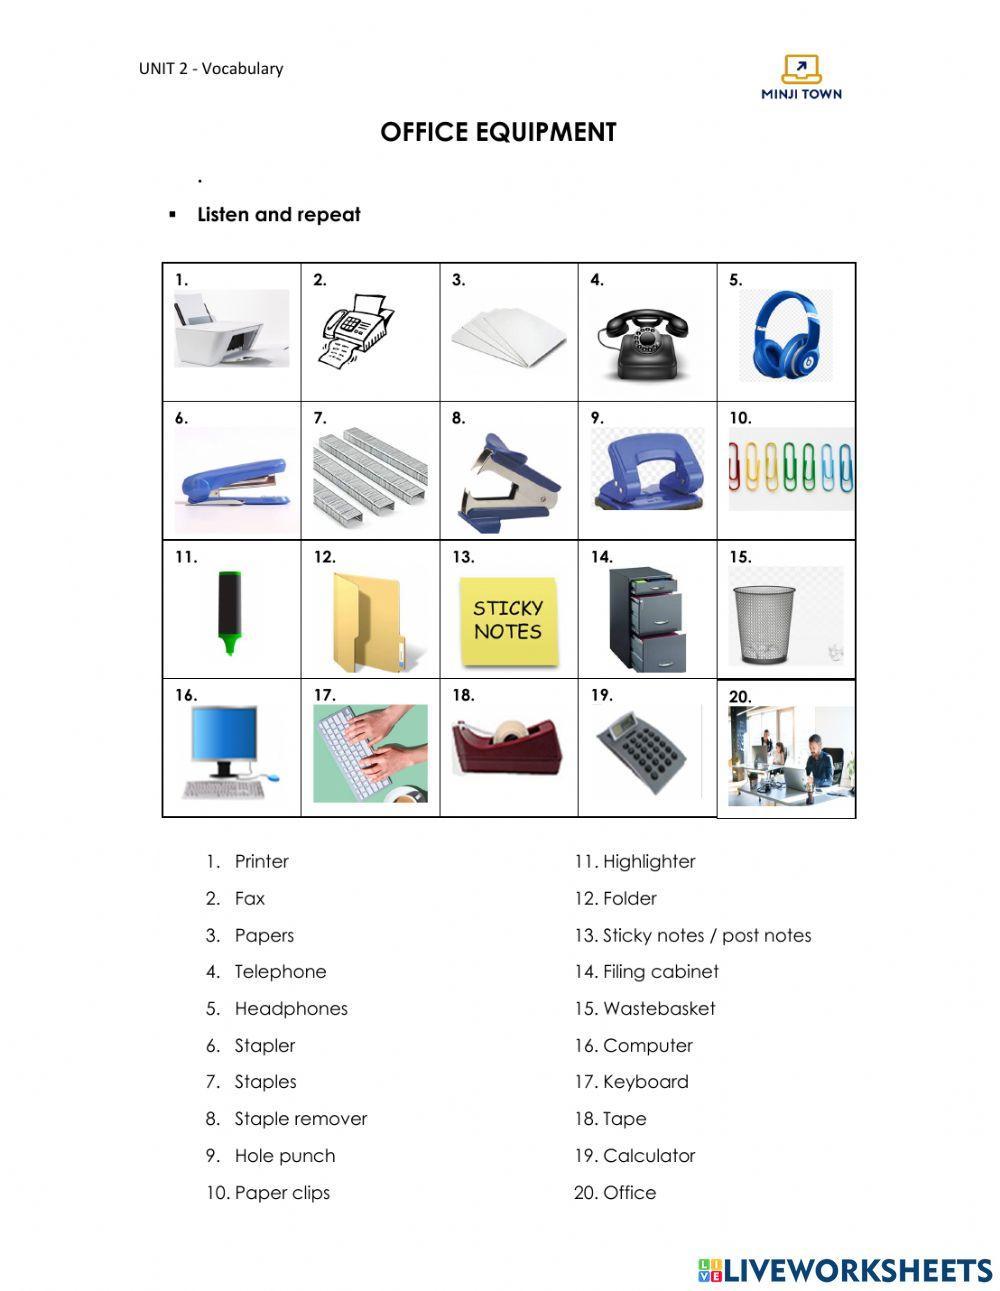 Office equipment - ESL worksheet by LadyKitty